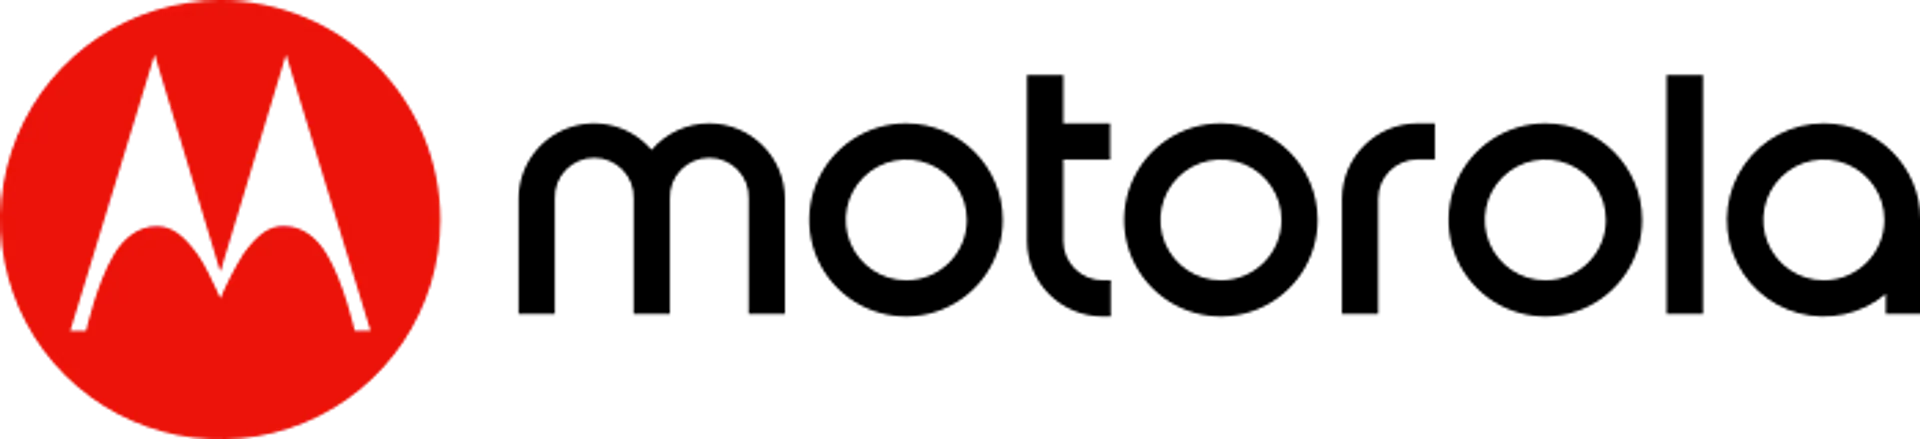 MOTOROLA logo